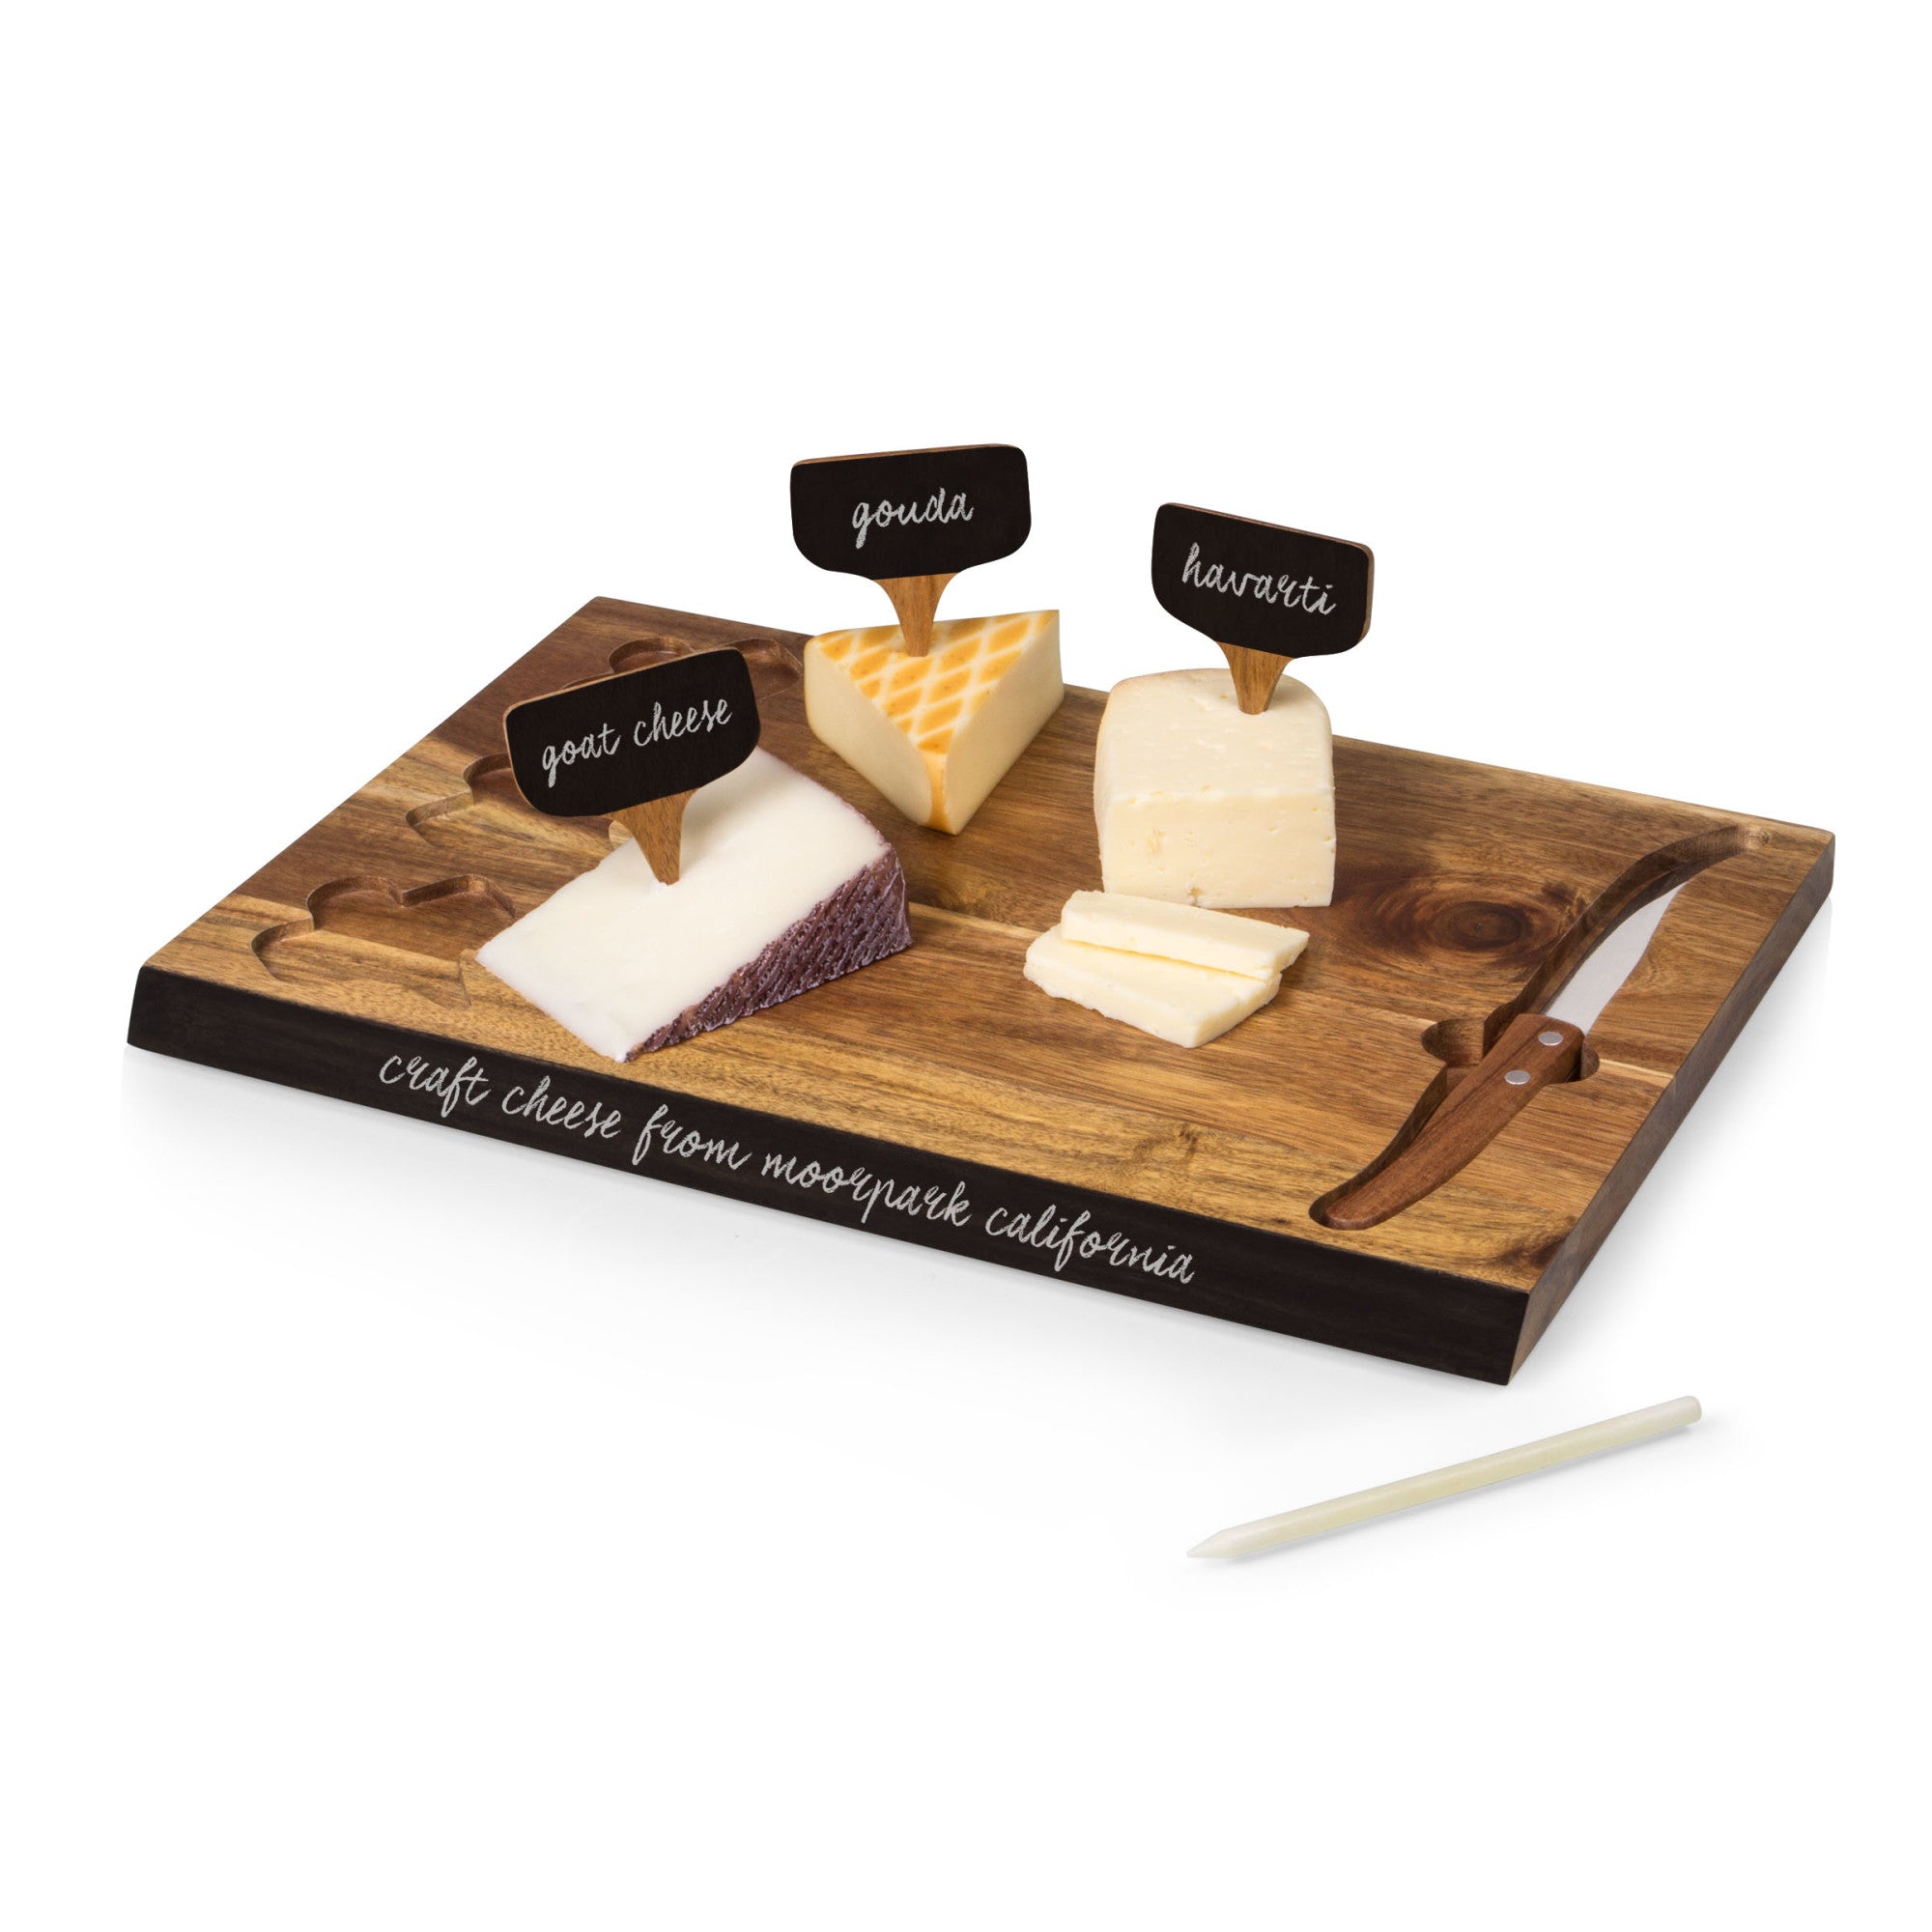 Baltimore Ravens - Delio Acacia Cheese Cutting Board & Tools Set